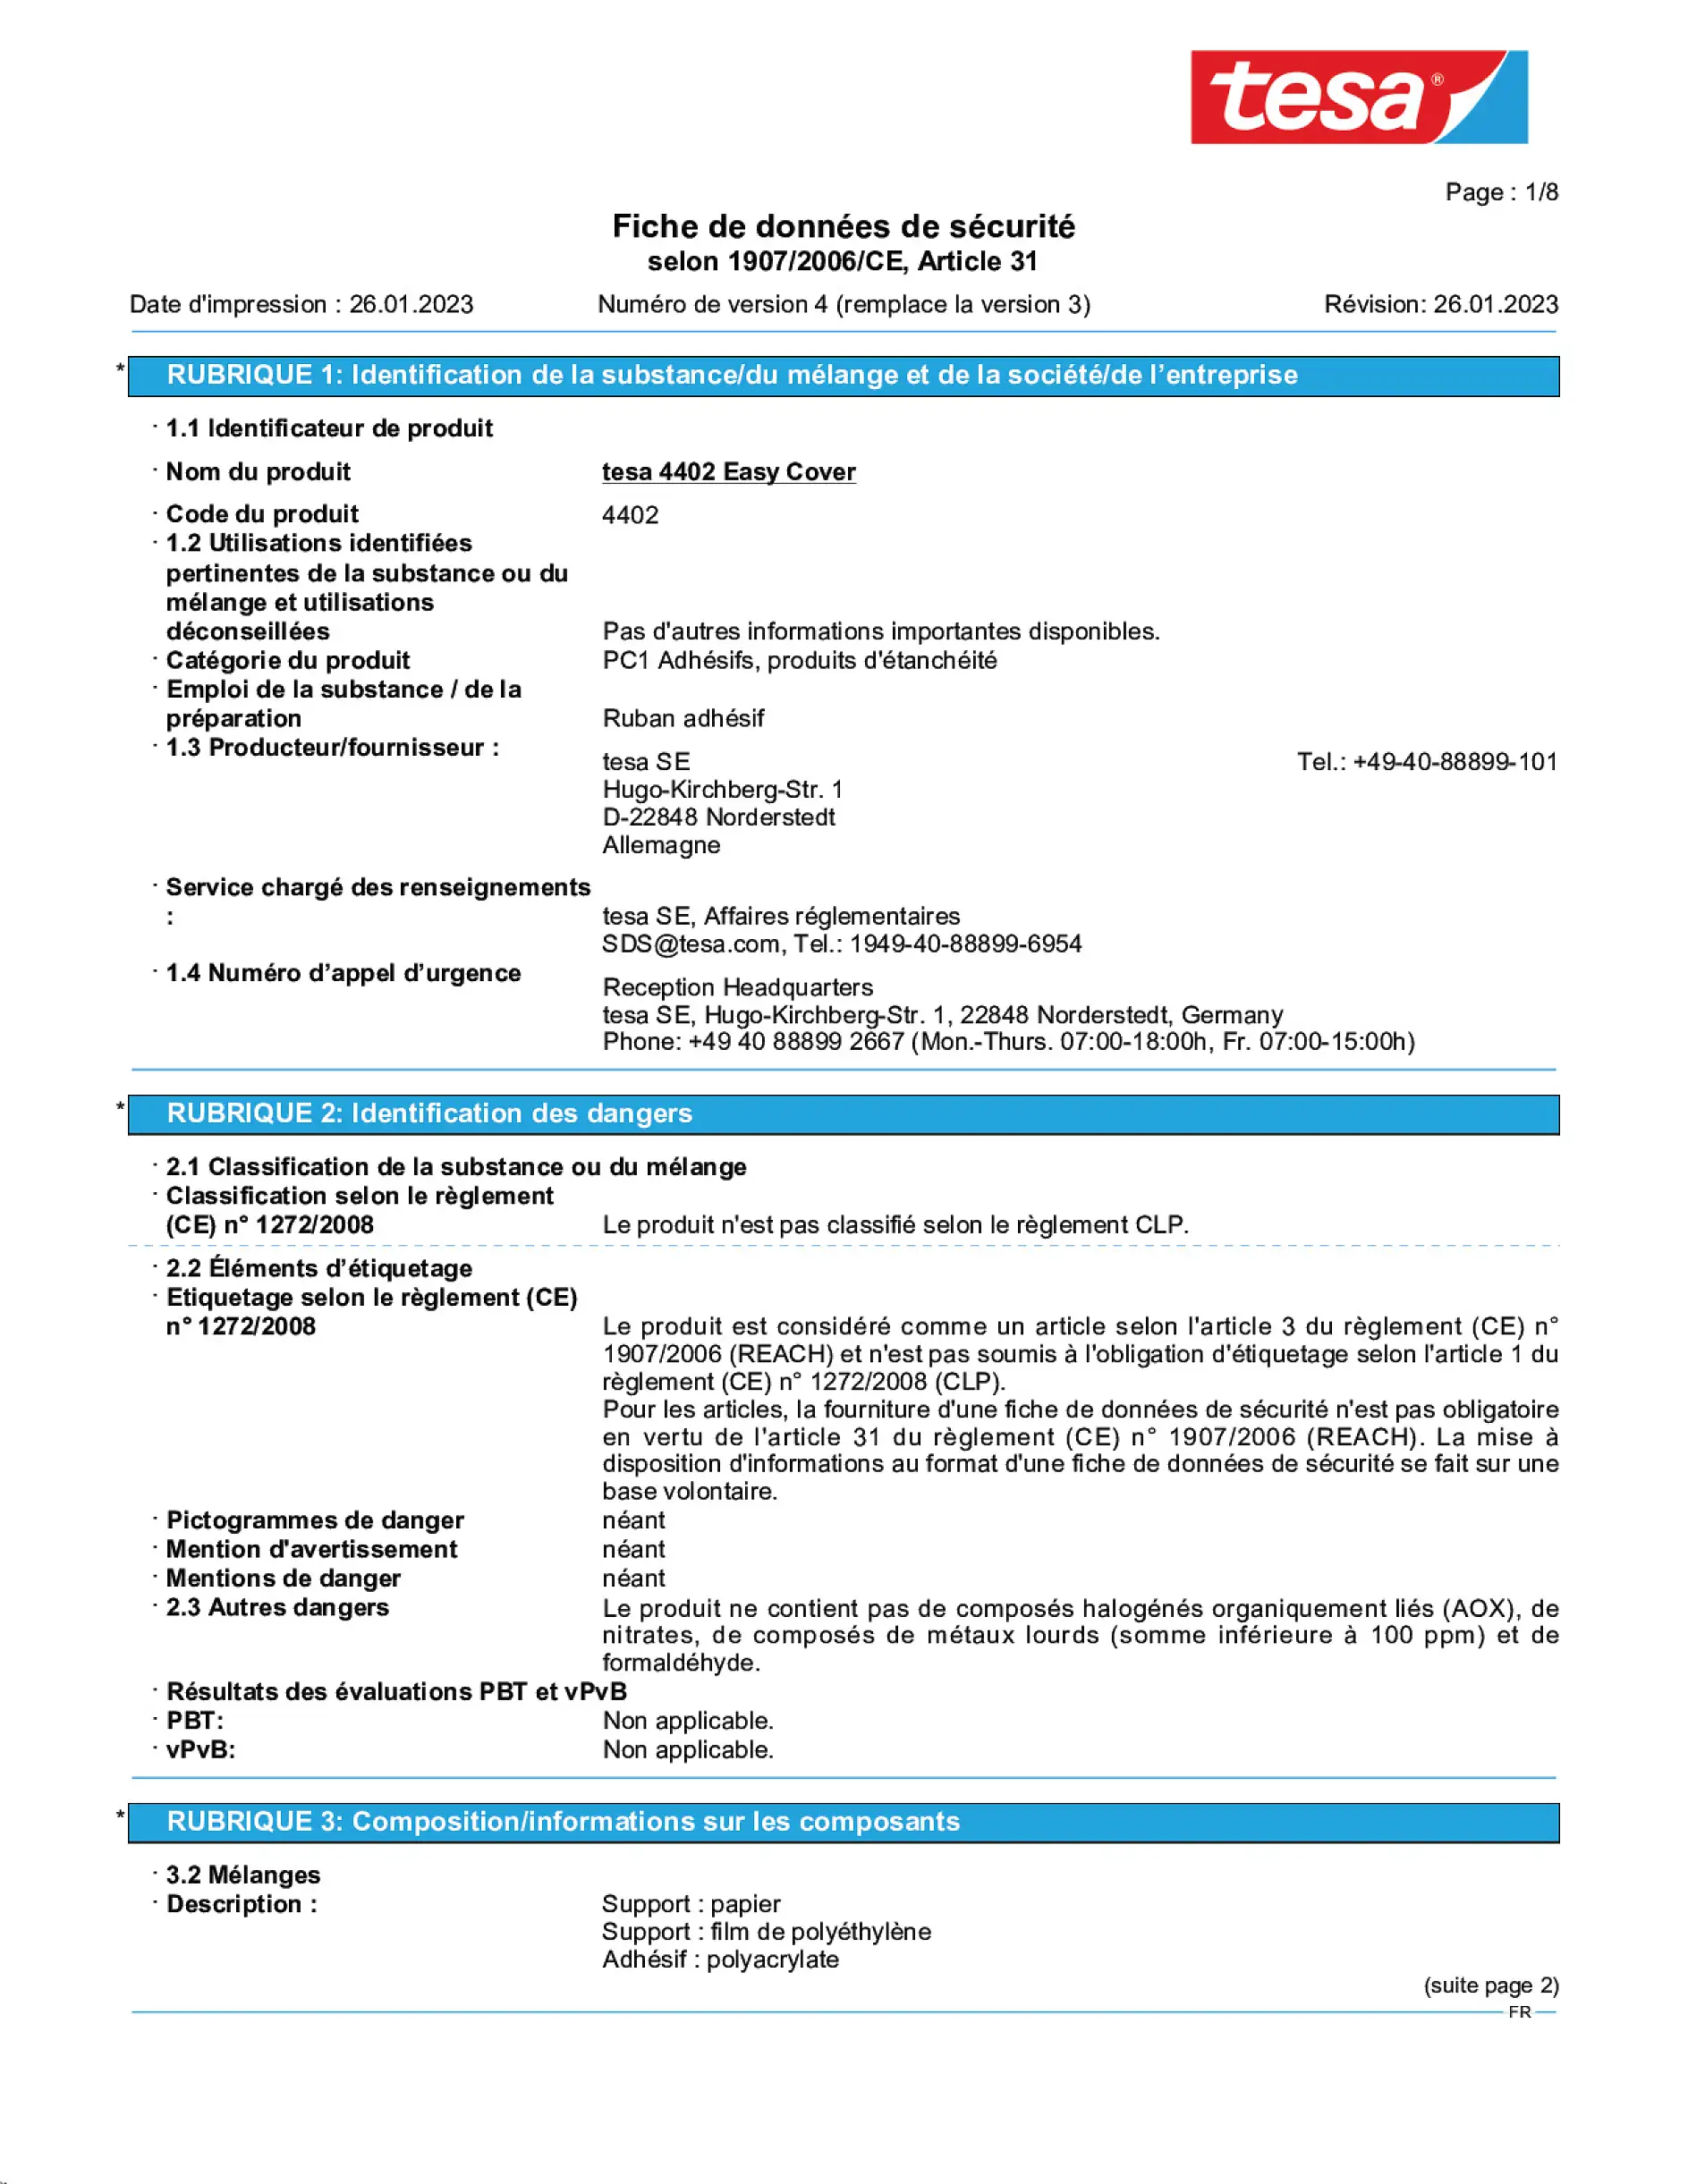 Safety data sheet_tesa® Professional 04402_fr-FR_v4